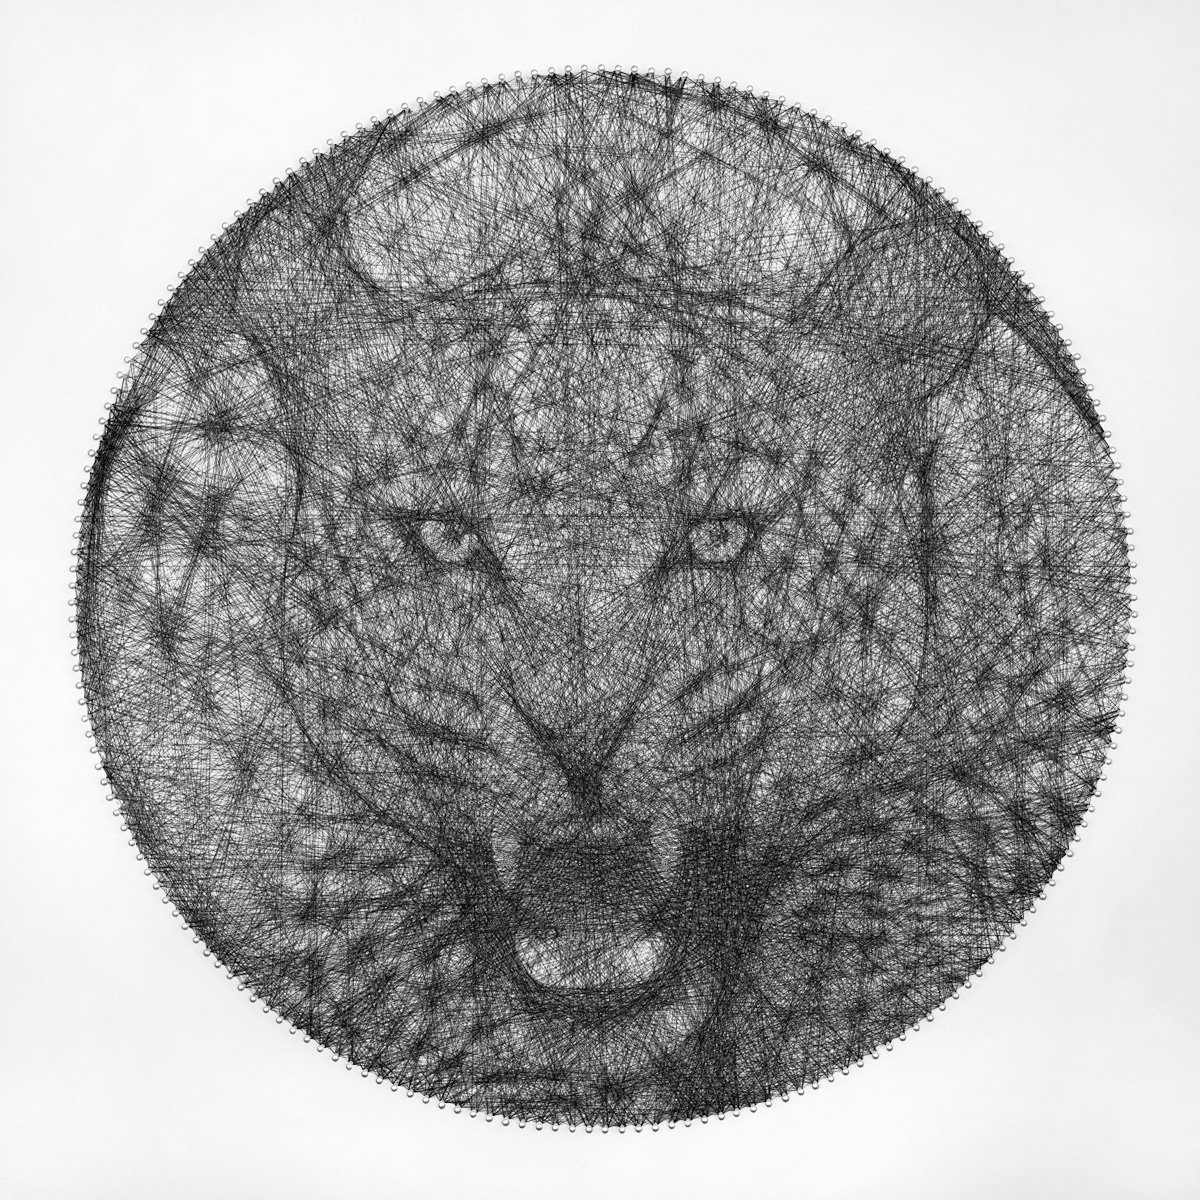 Jaguar Totem Animal Sring Art by Andrey Saharov